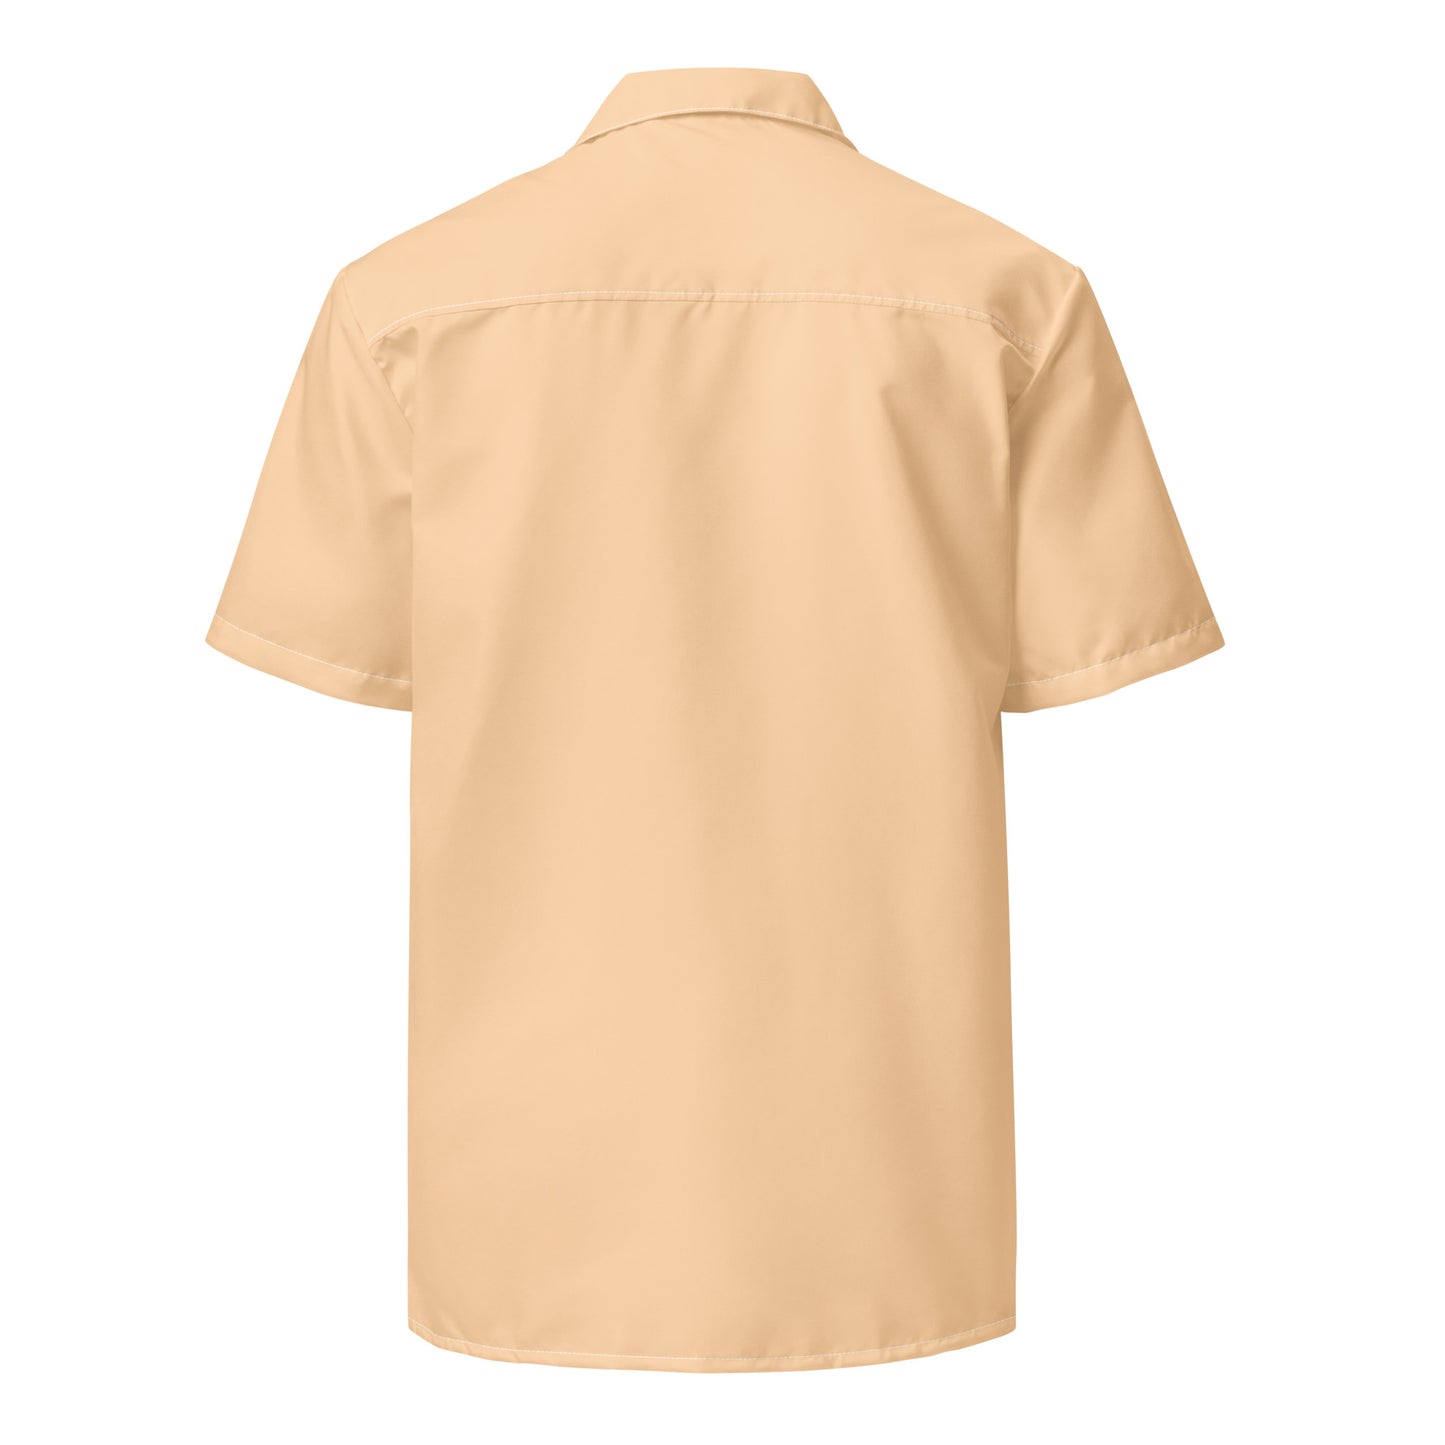 Clownfish Orange button shirt - Tropical Seas Clothing 